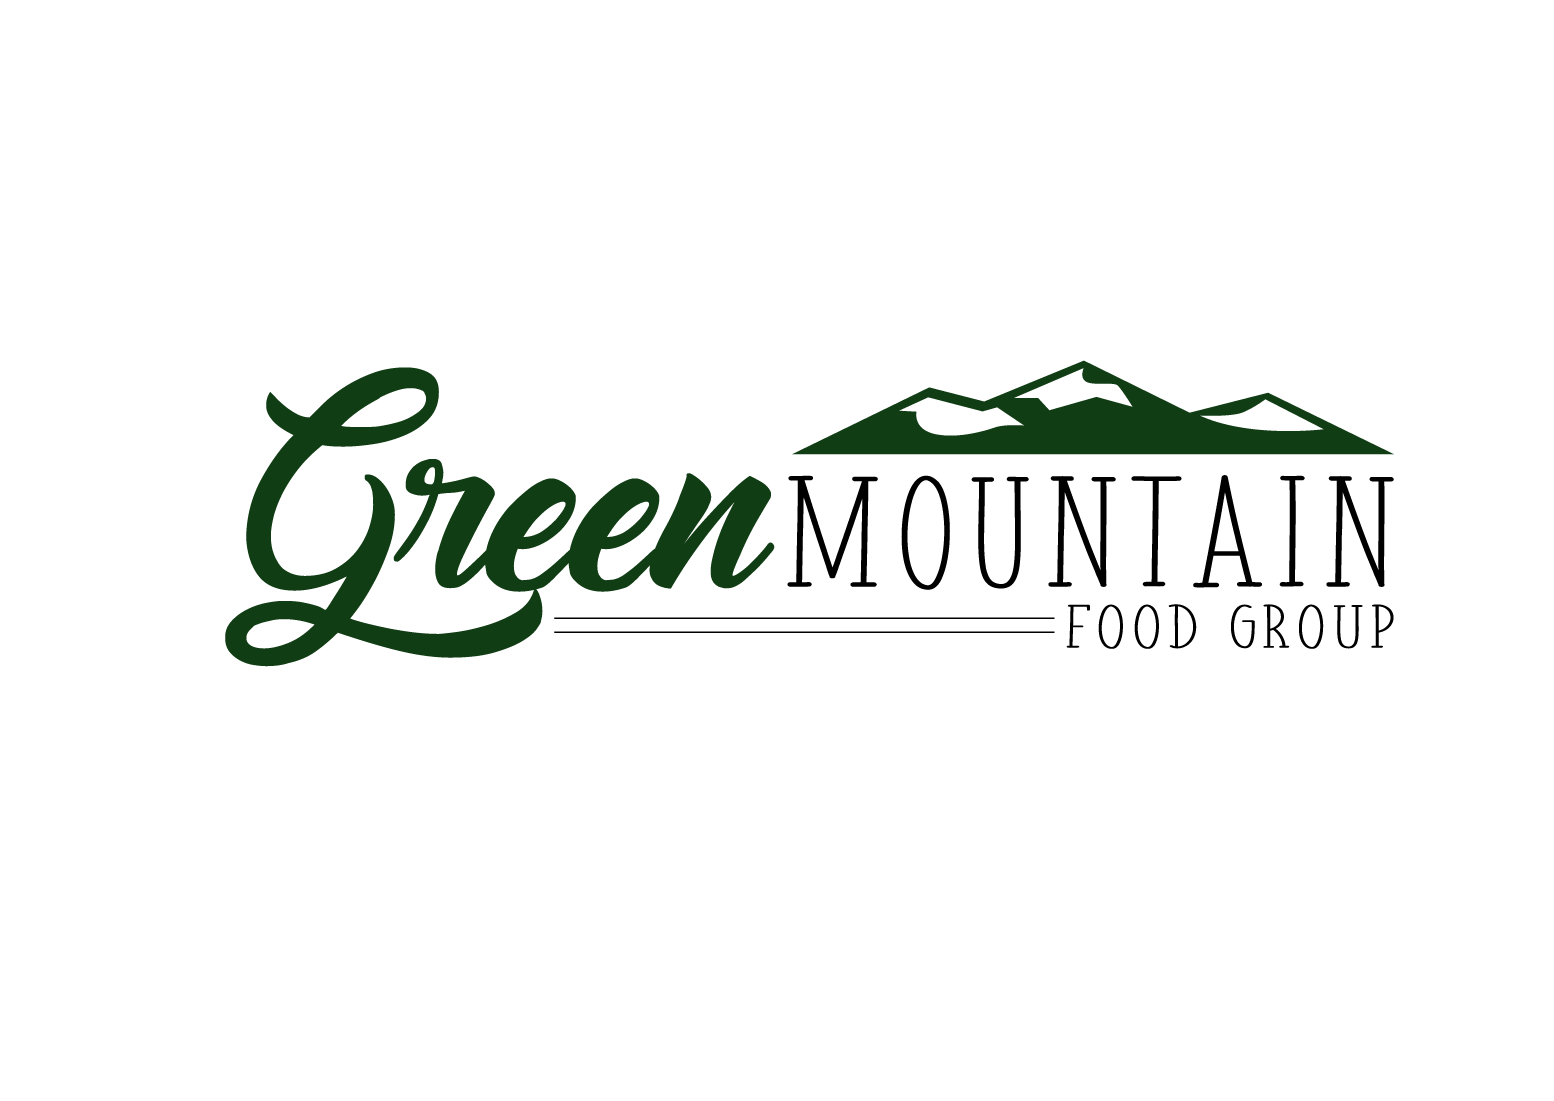 Green Mountain Food Group